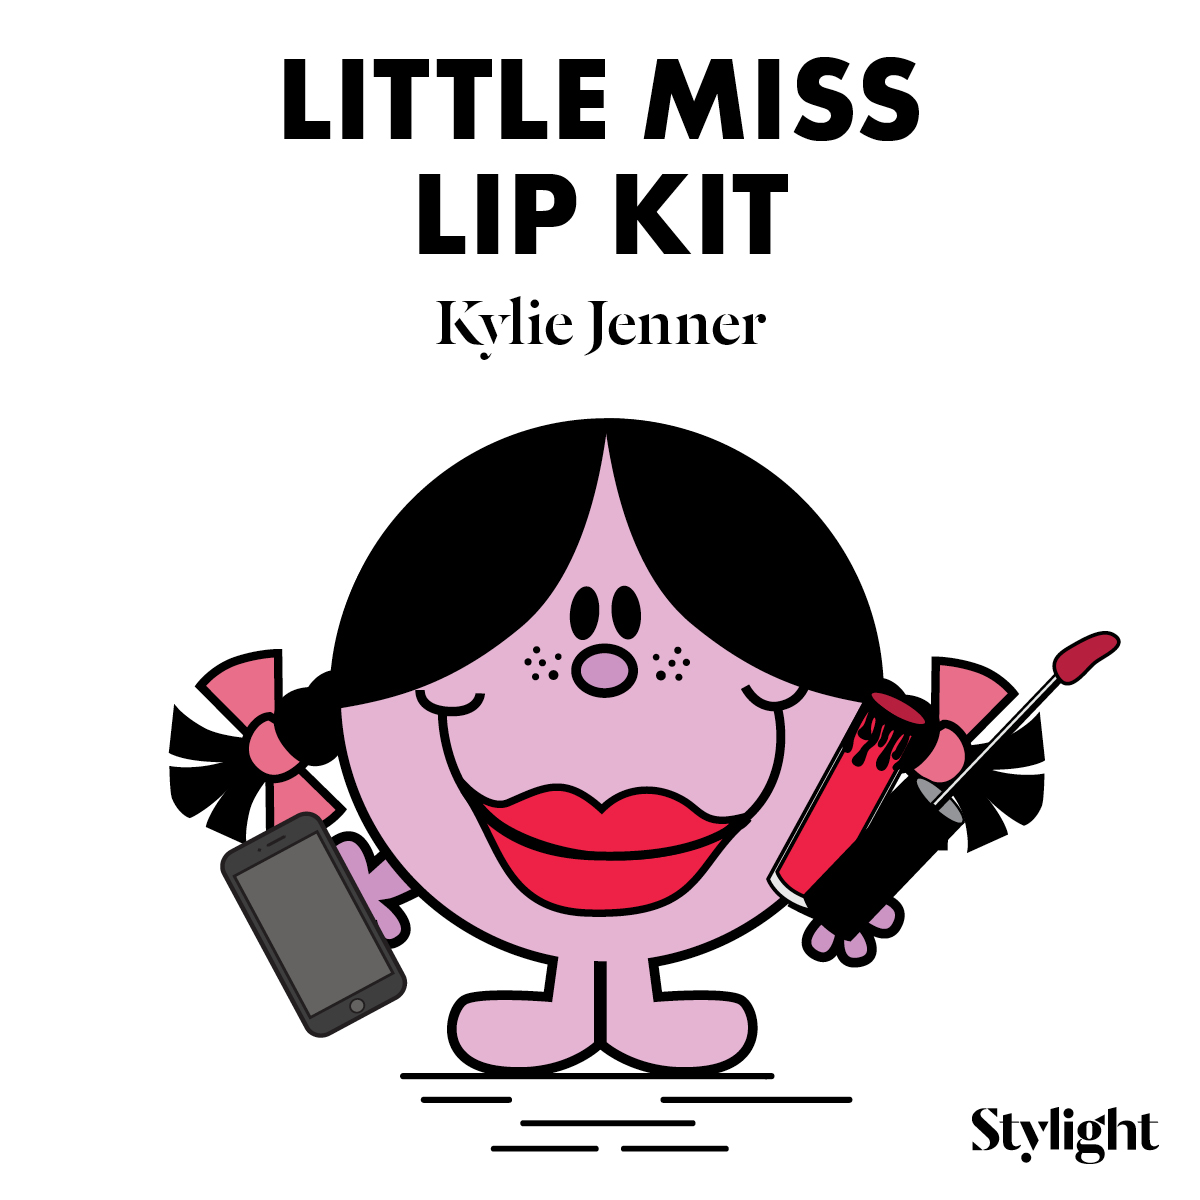 Little miss kit